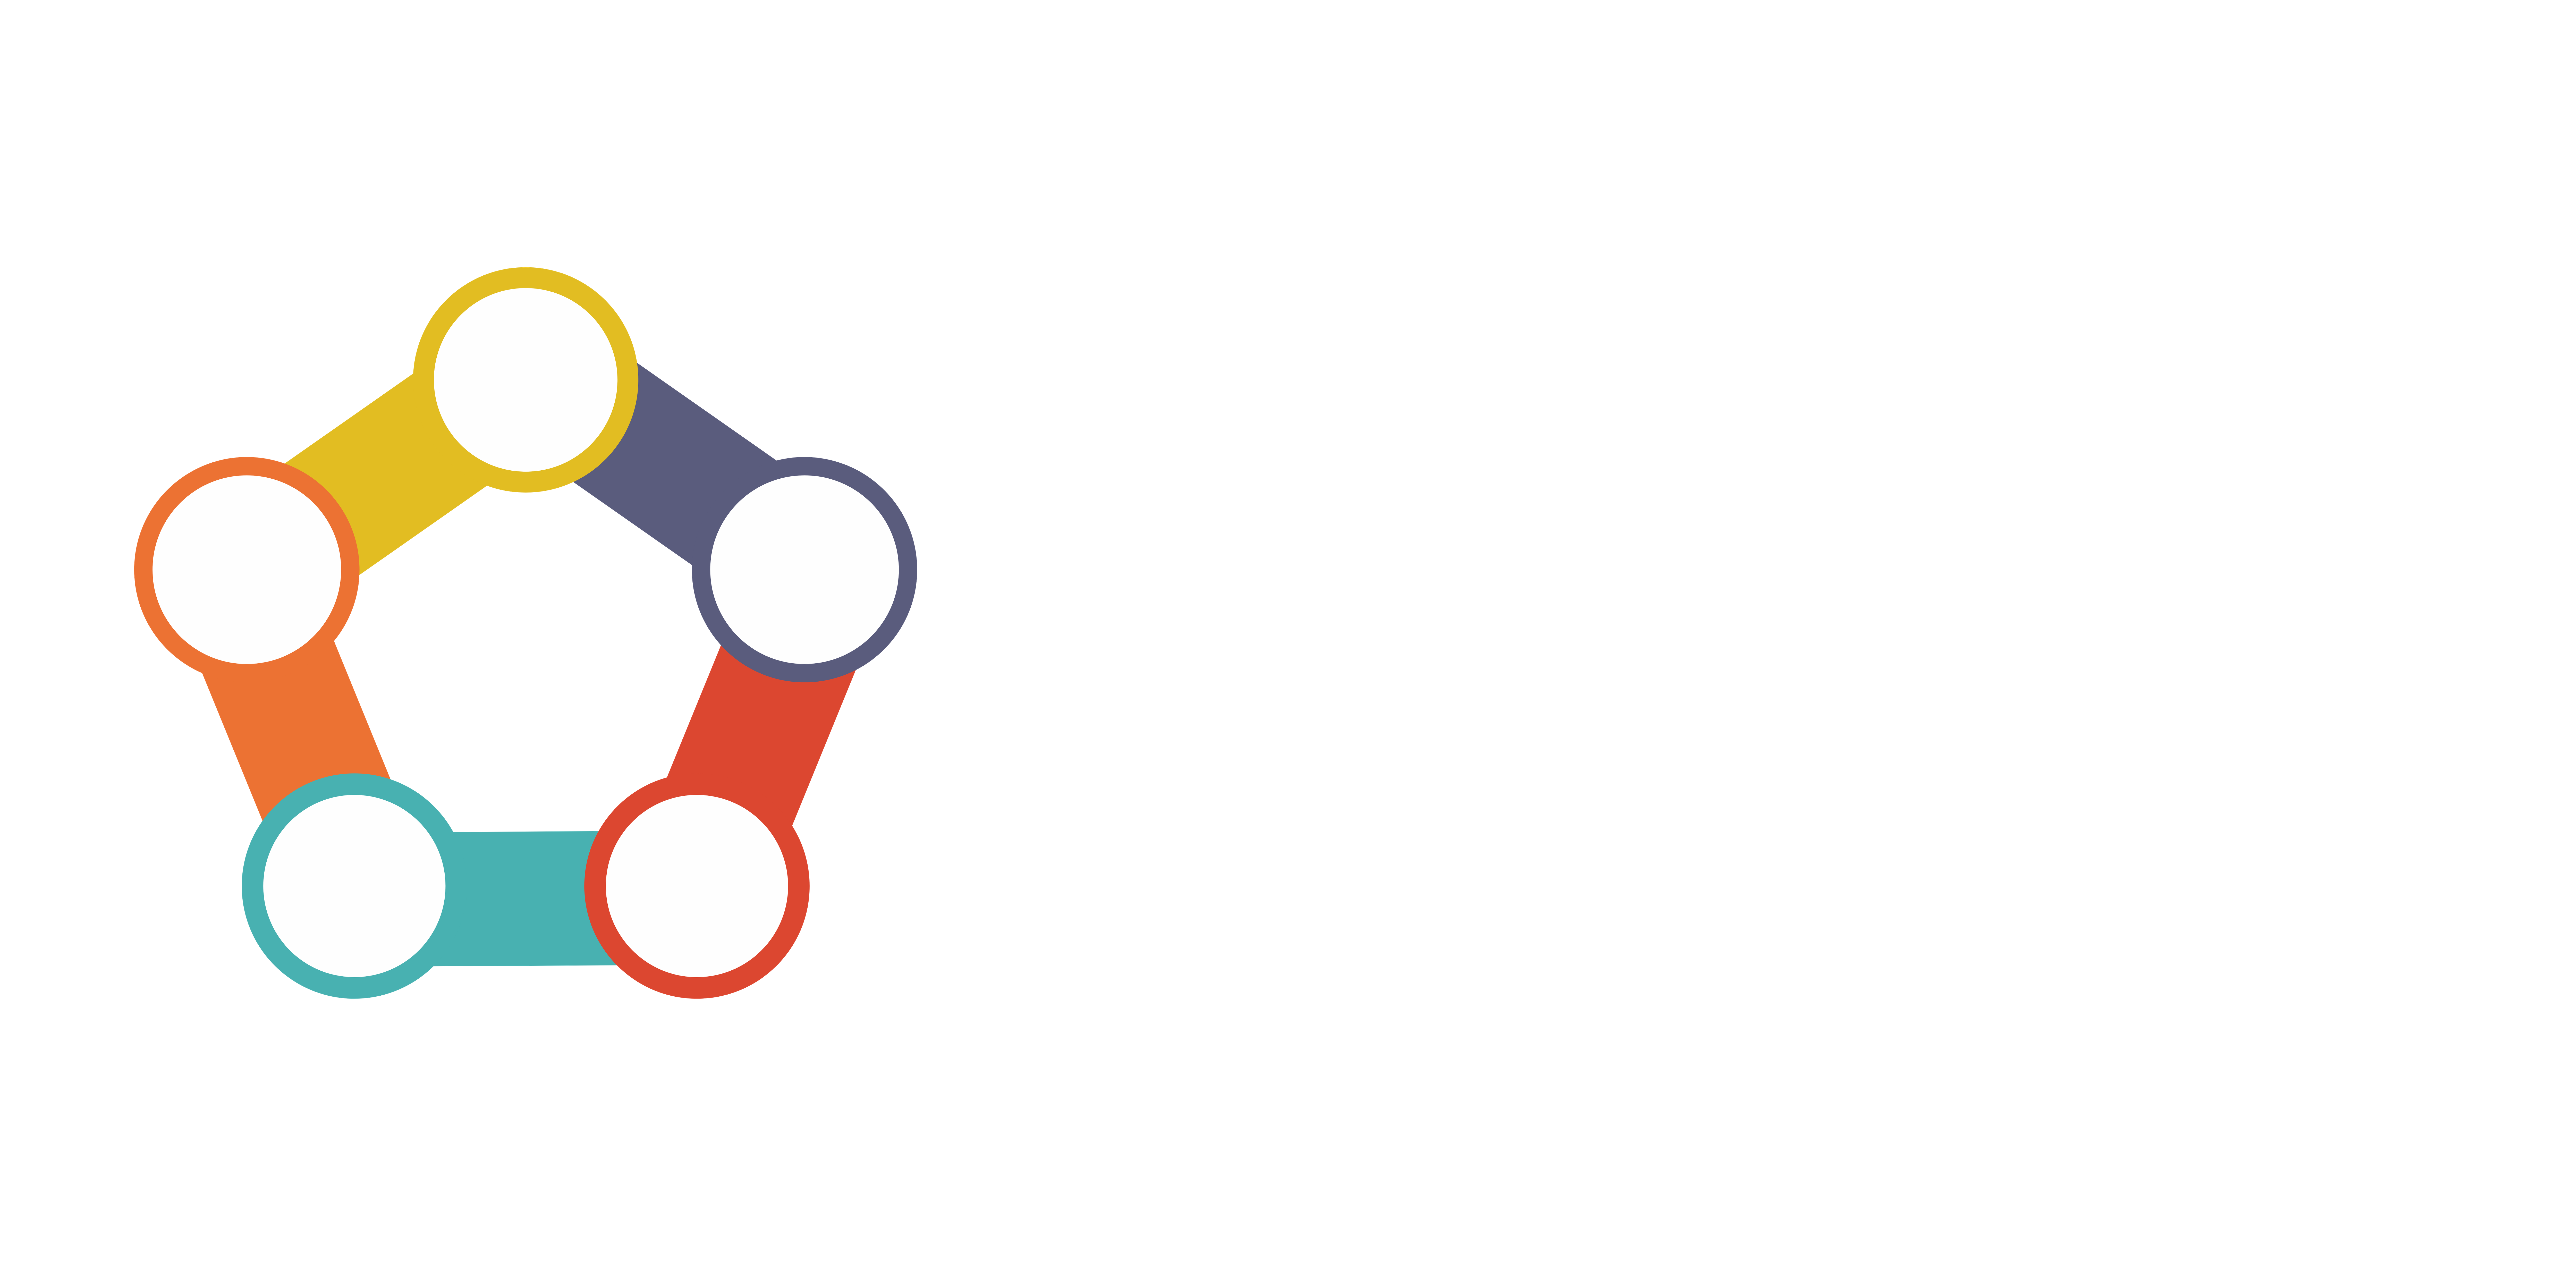 SOEM Digital